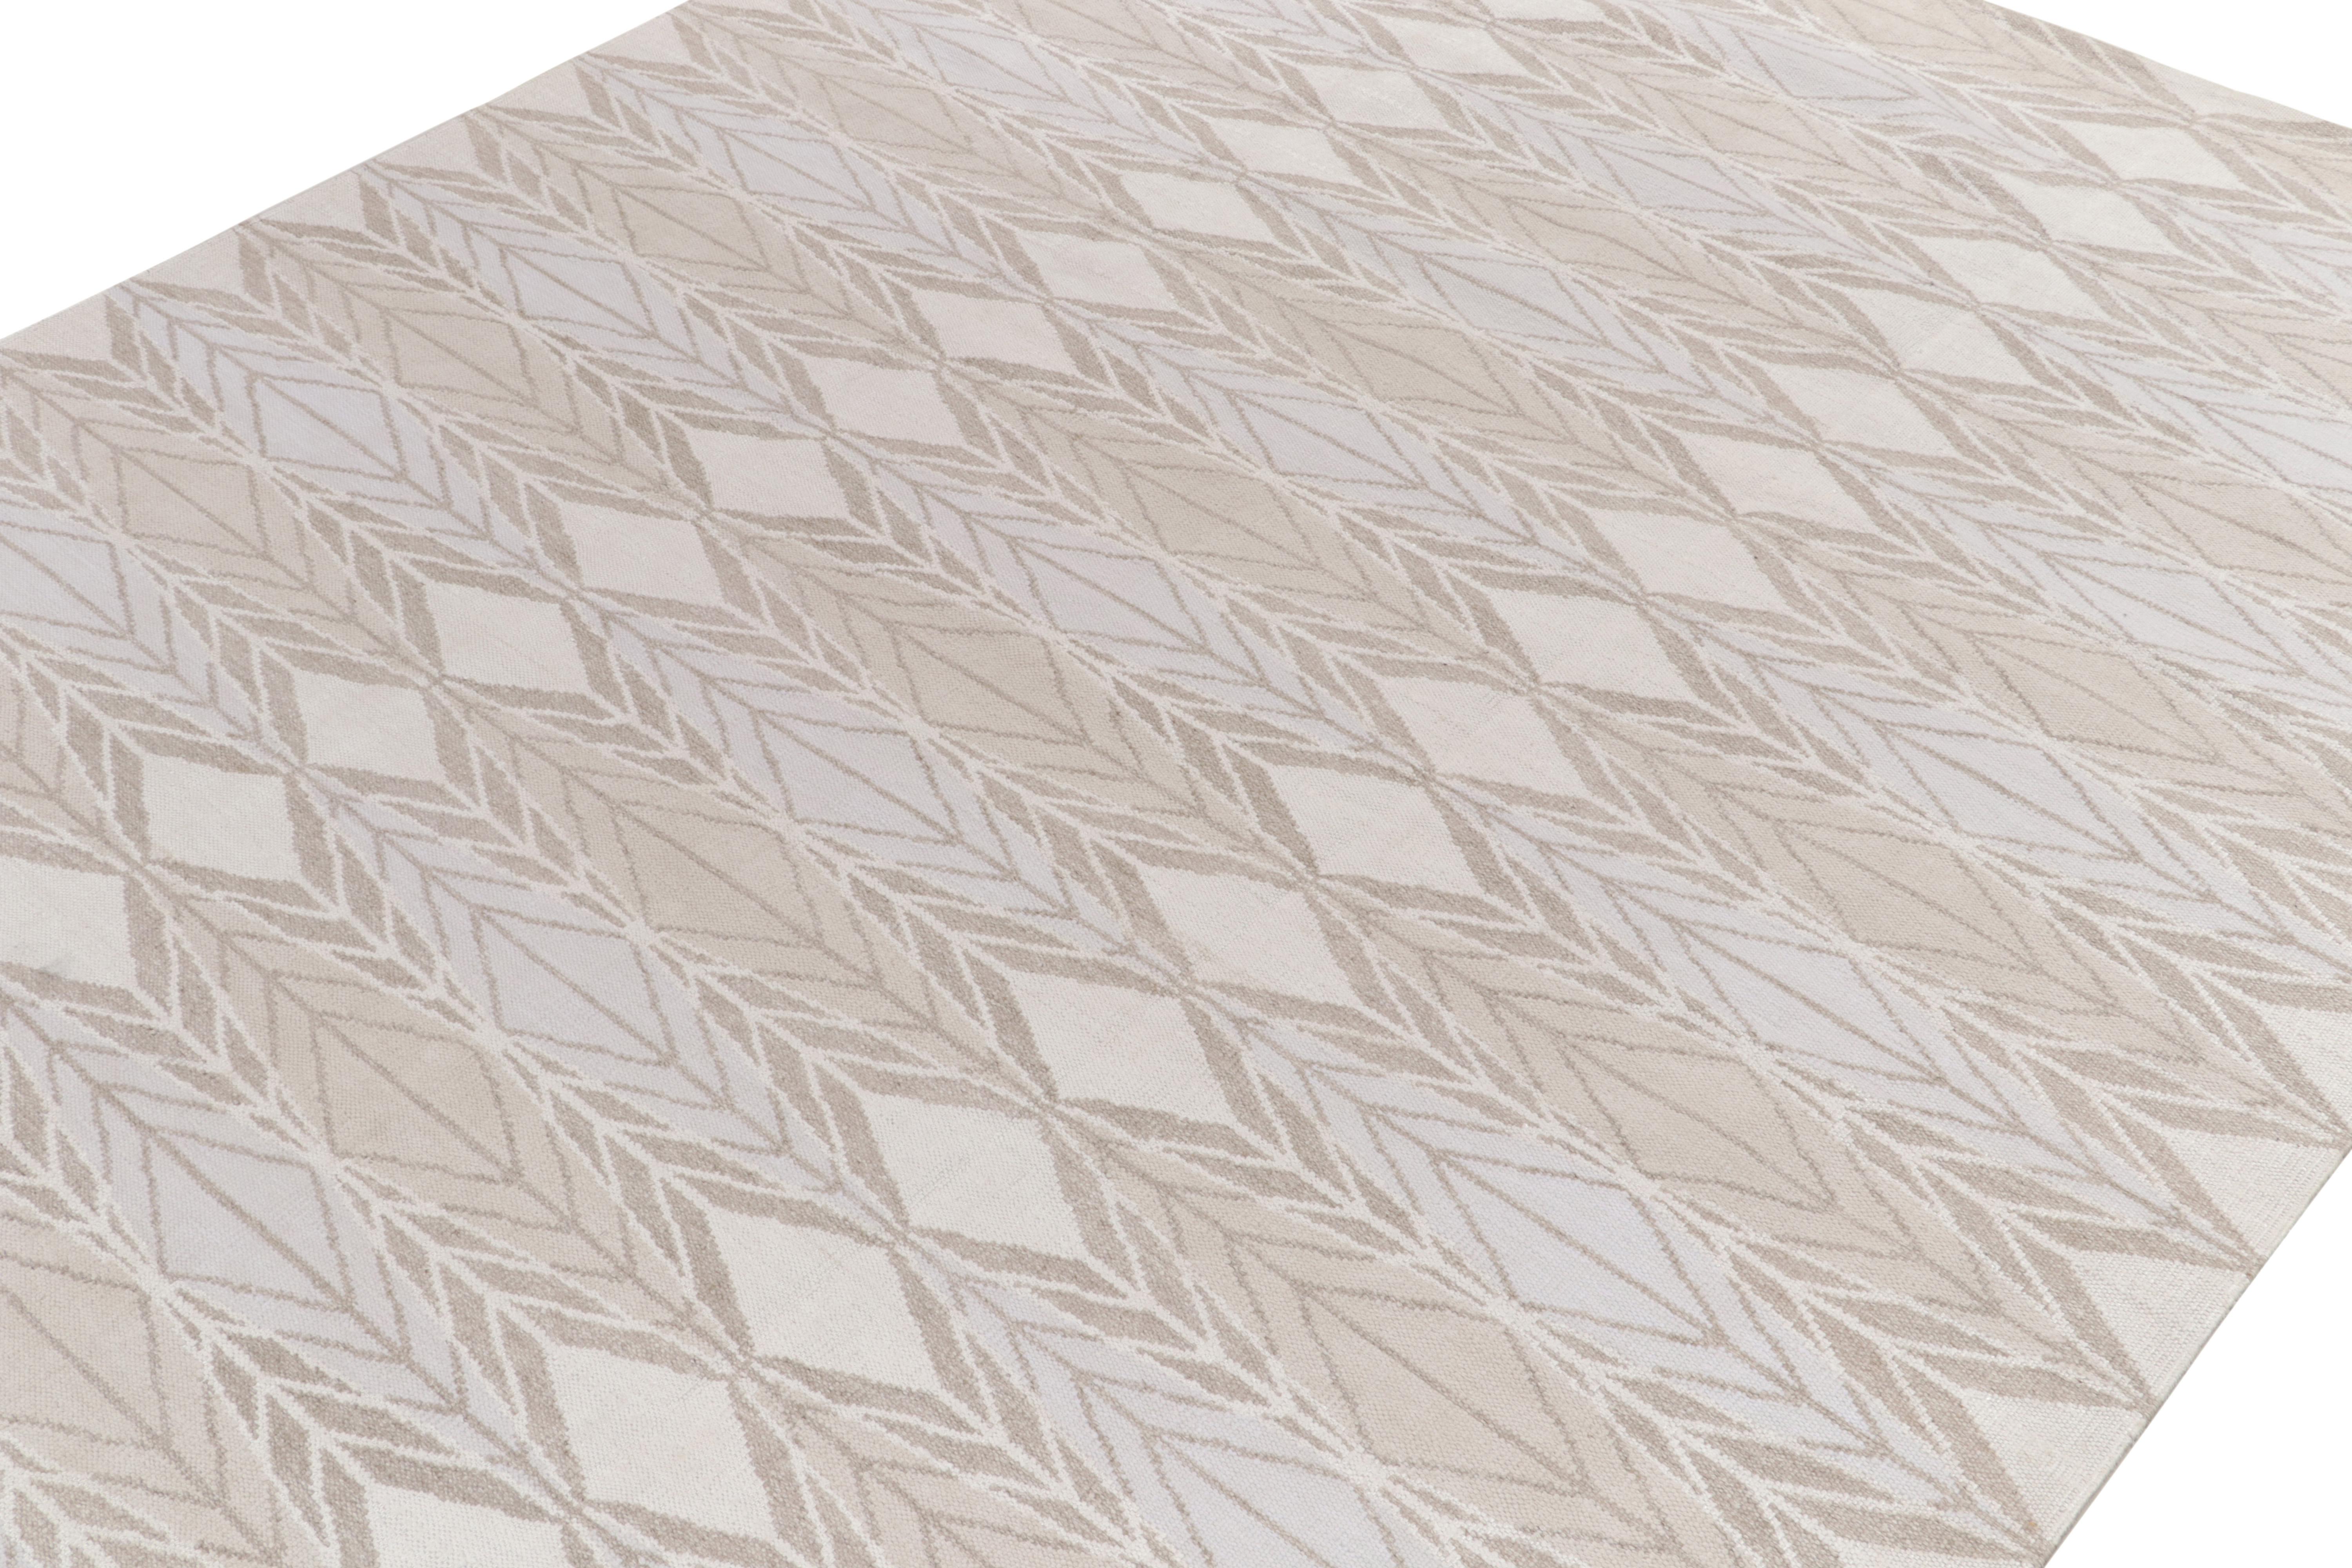 Indian Rug & Kilim's Scandinavian Style Kilim Rug in White, Beige Geometric Pattern For Sale